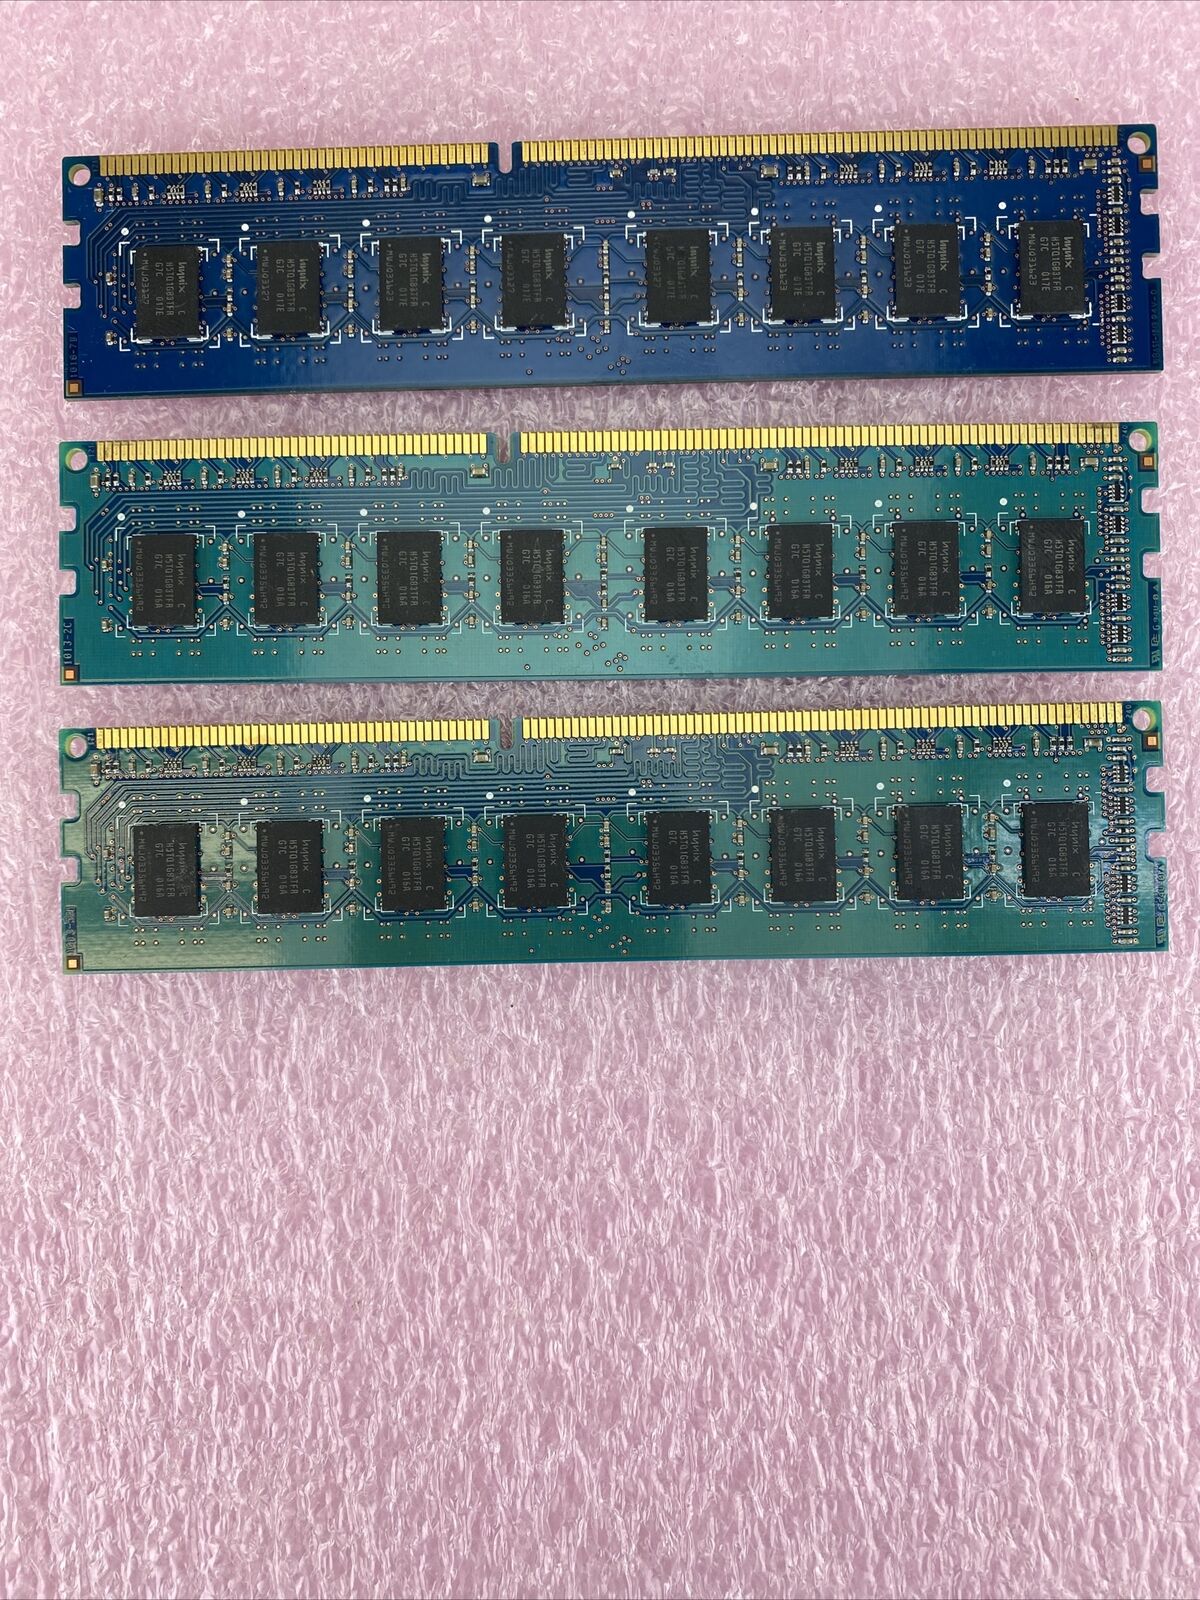 3x 2GB Hynix HMT125U6TFR8C-G7 PC3-8500U 2Rx8 1066Mhz CL7 1.5V Non-ECC DDR3 SDRAM